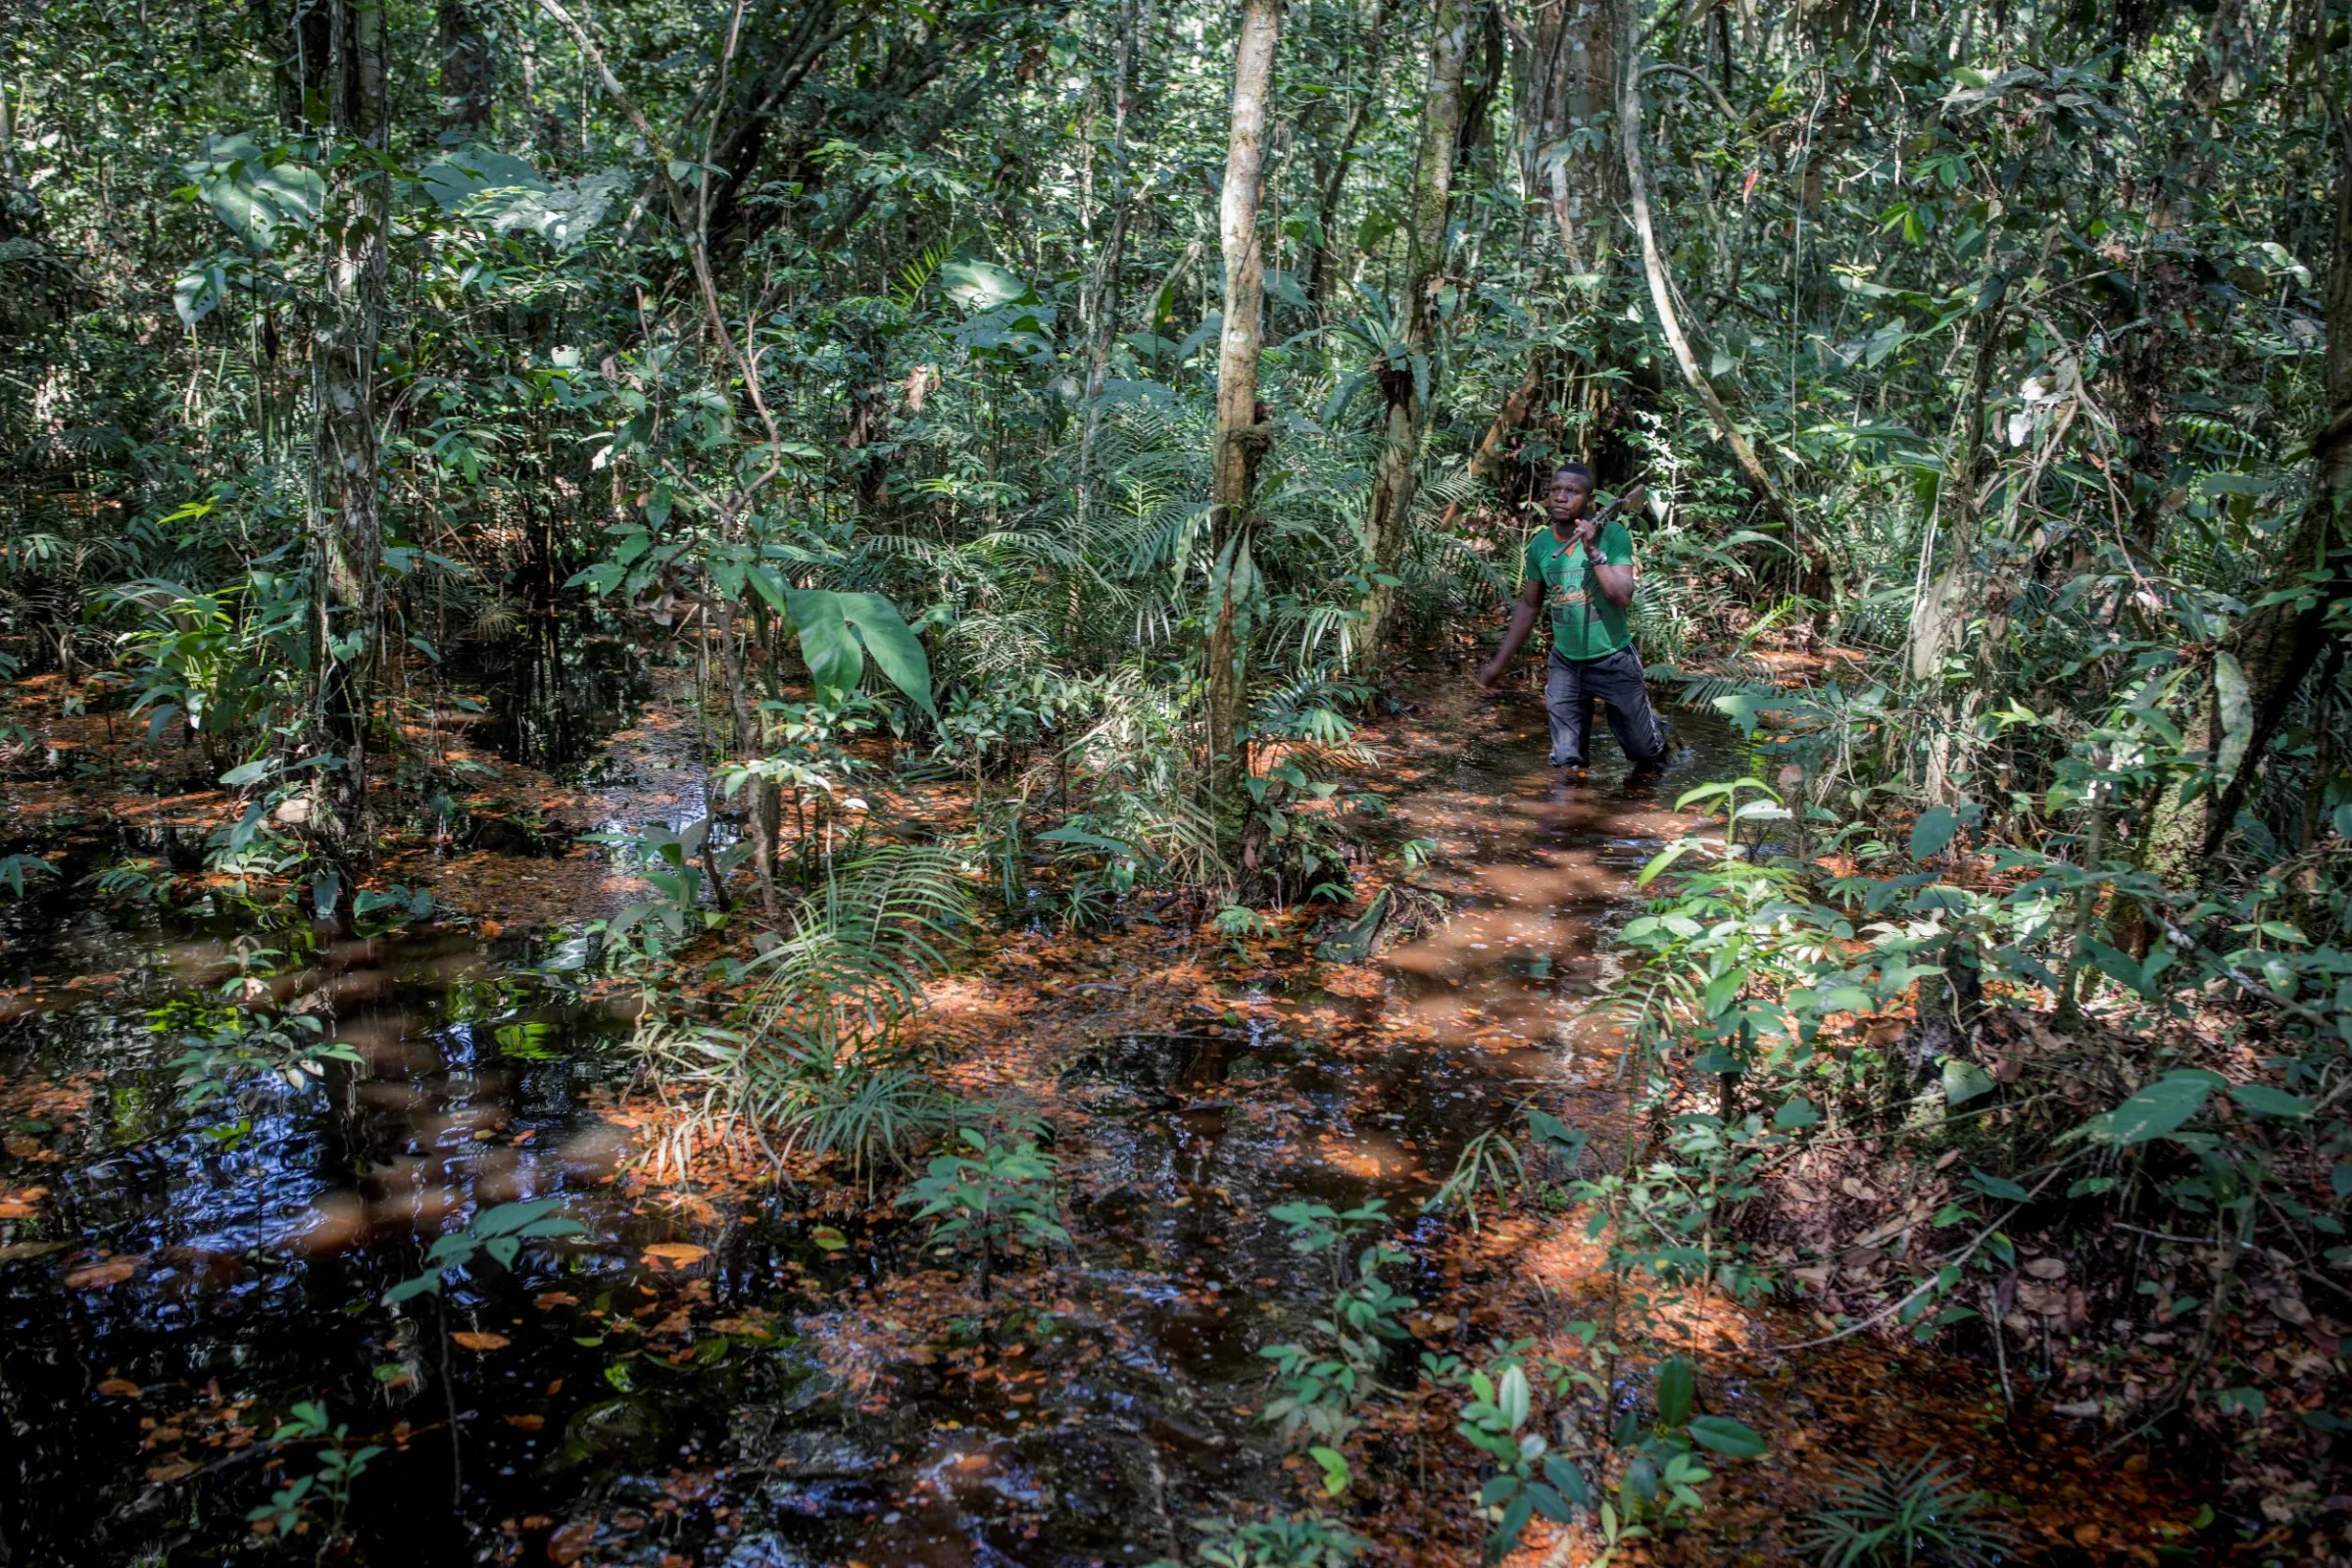 The next Amazon? Congo Basin faces rising deforestation threat